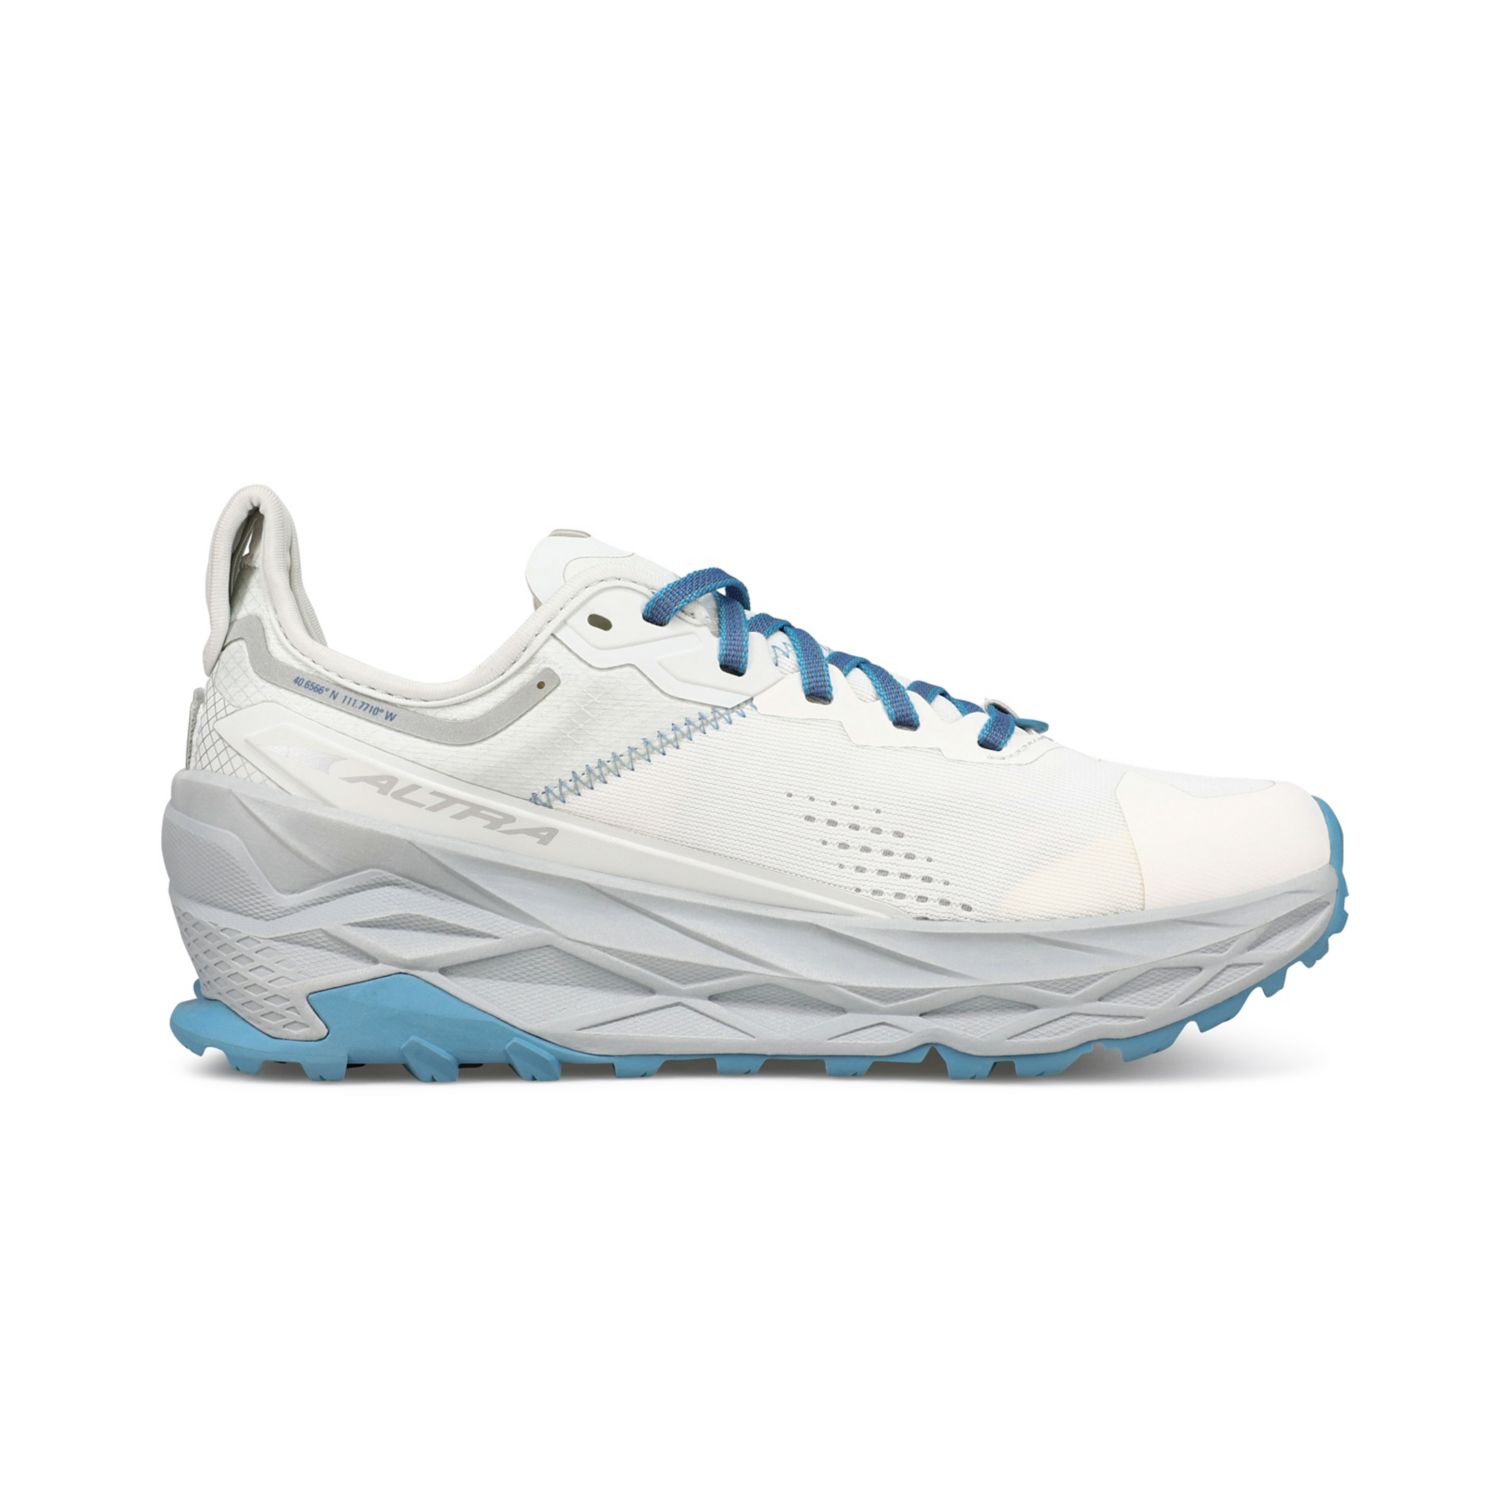 White / Blue Altra Olympus 5 Women's Trail Running Shoes | Ireland-79416539